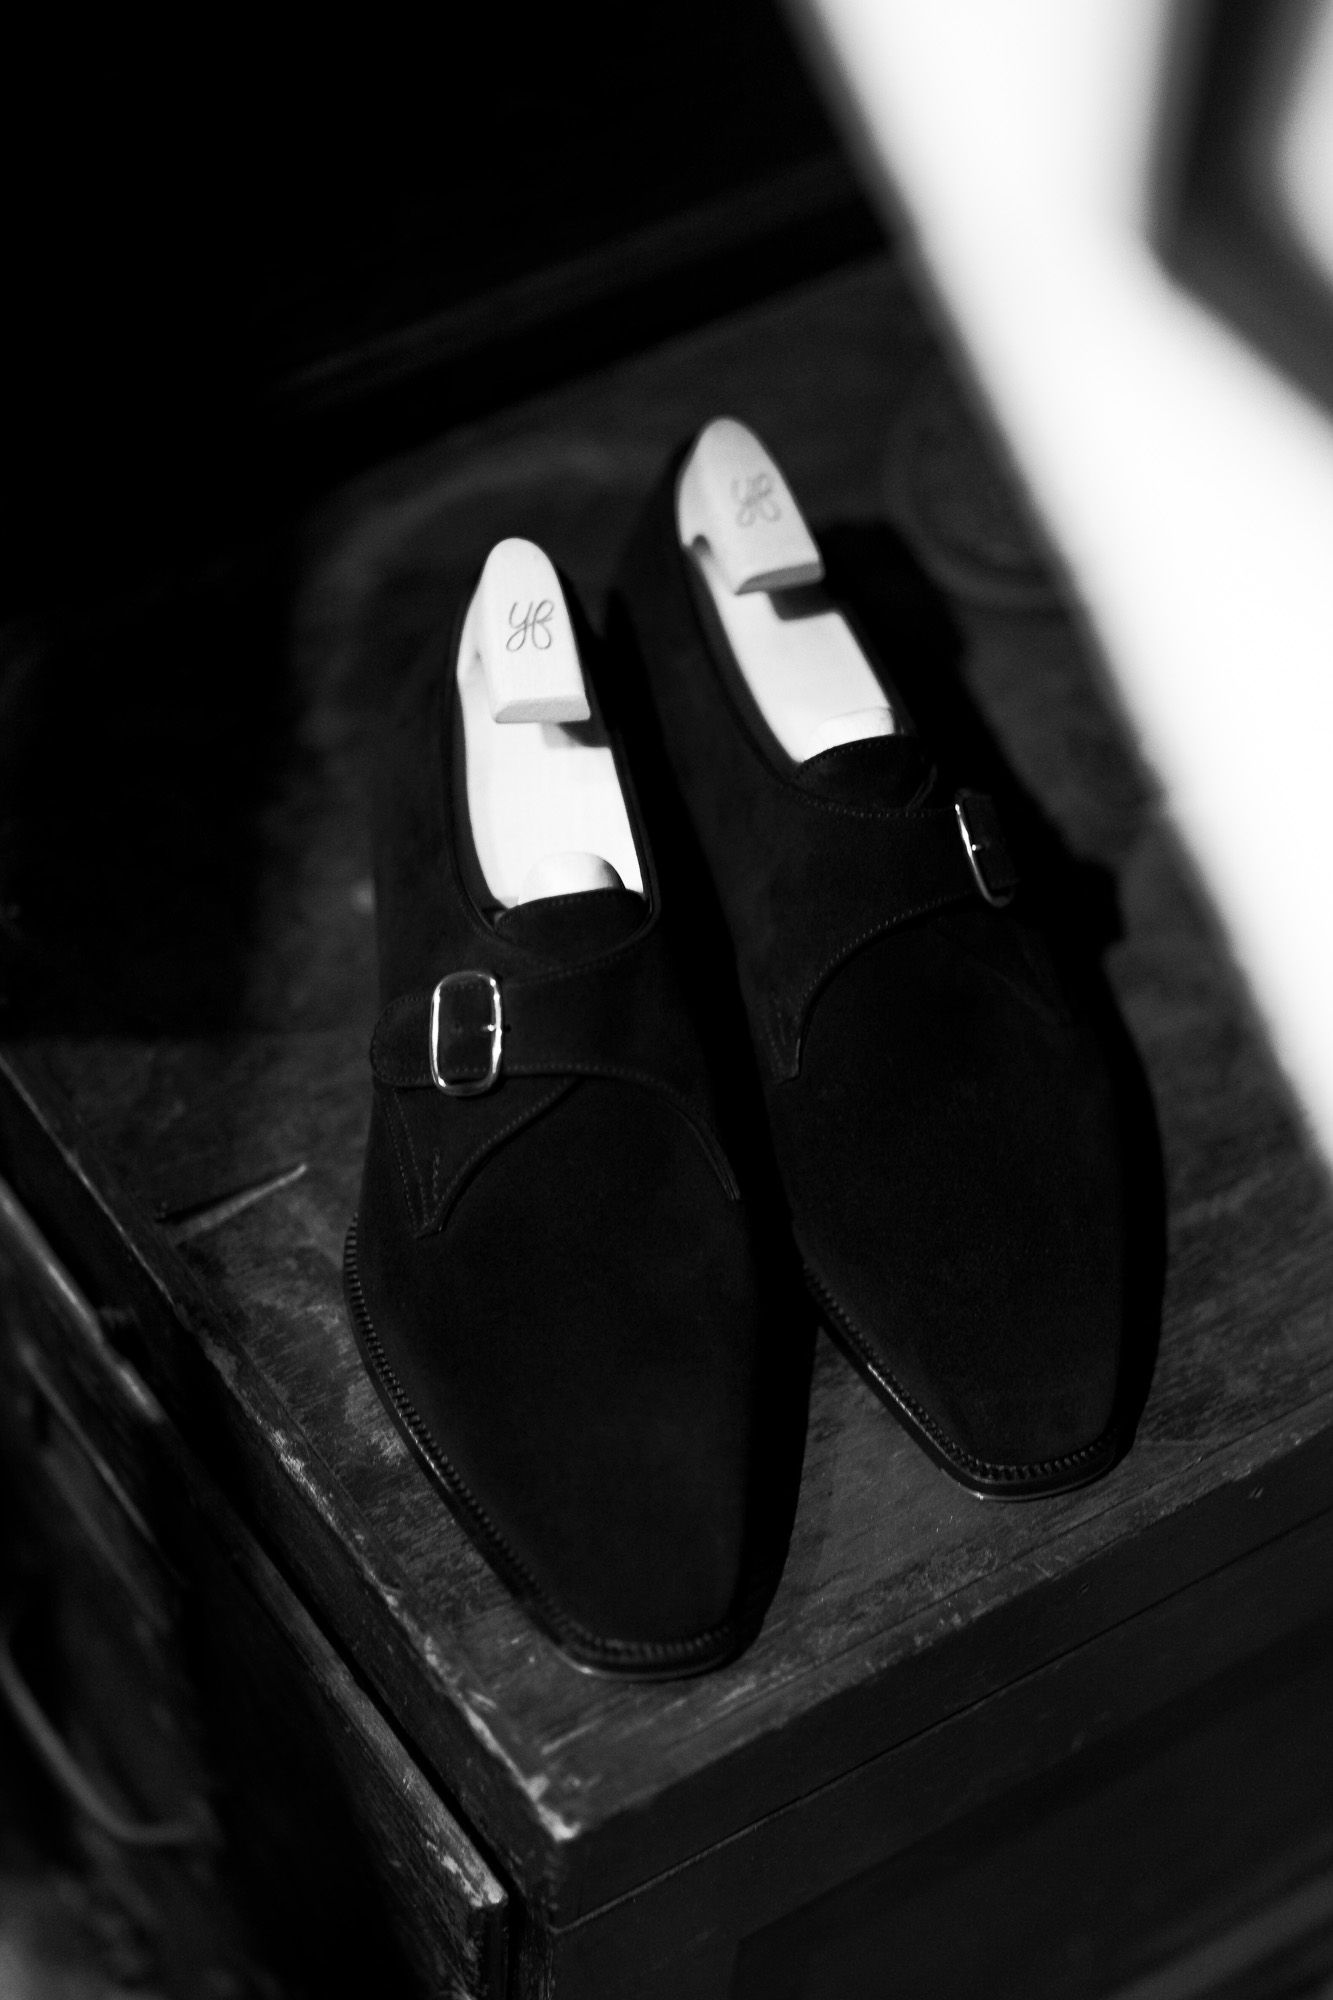 Yohei Fukuda "MTO" Single Monk Strap Shoes Black Suede 2021 ヨウヘイフクダ シングルモンク ストラップシューズ ブラックスエード ドレスシューズ 愛知 名古屋 Alto e Diritto altoediritto アルトエデリット Chisel Toe Half Rubber Rubber Heel